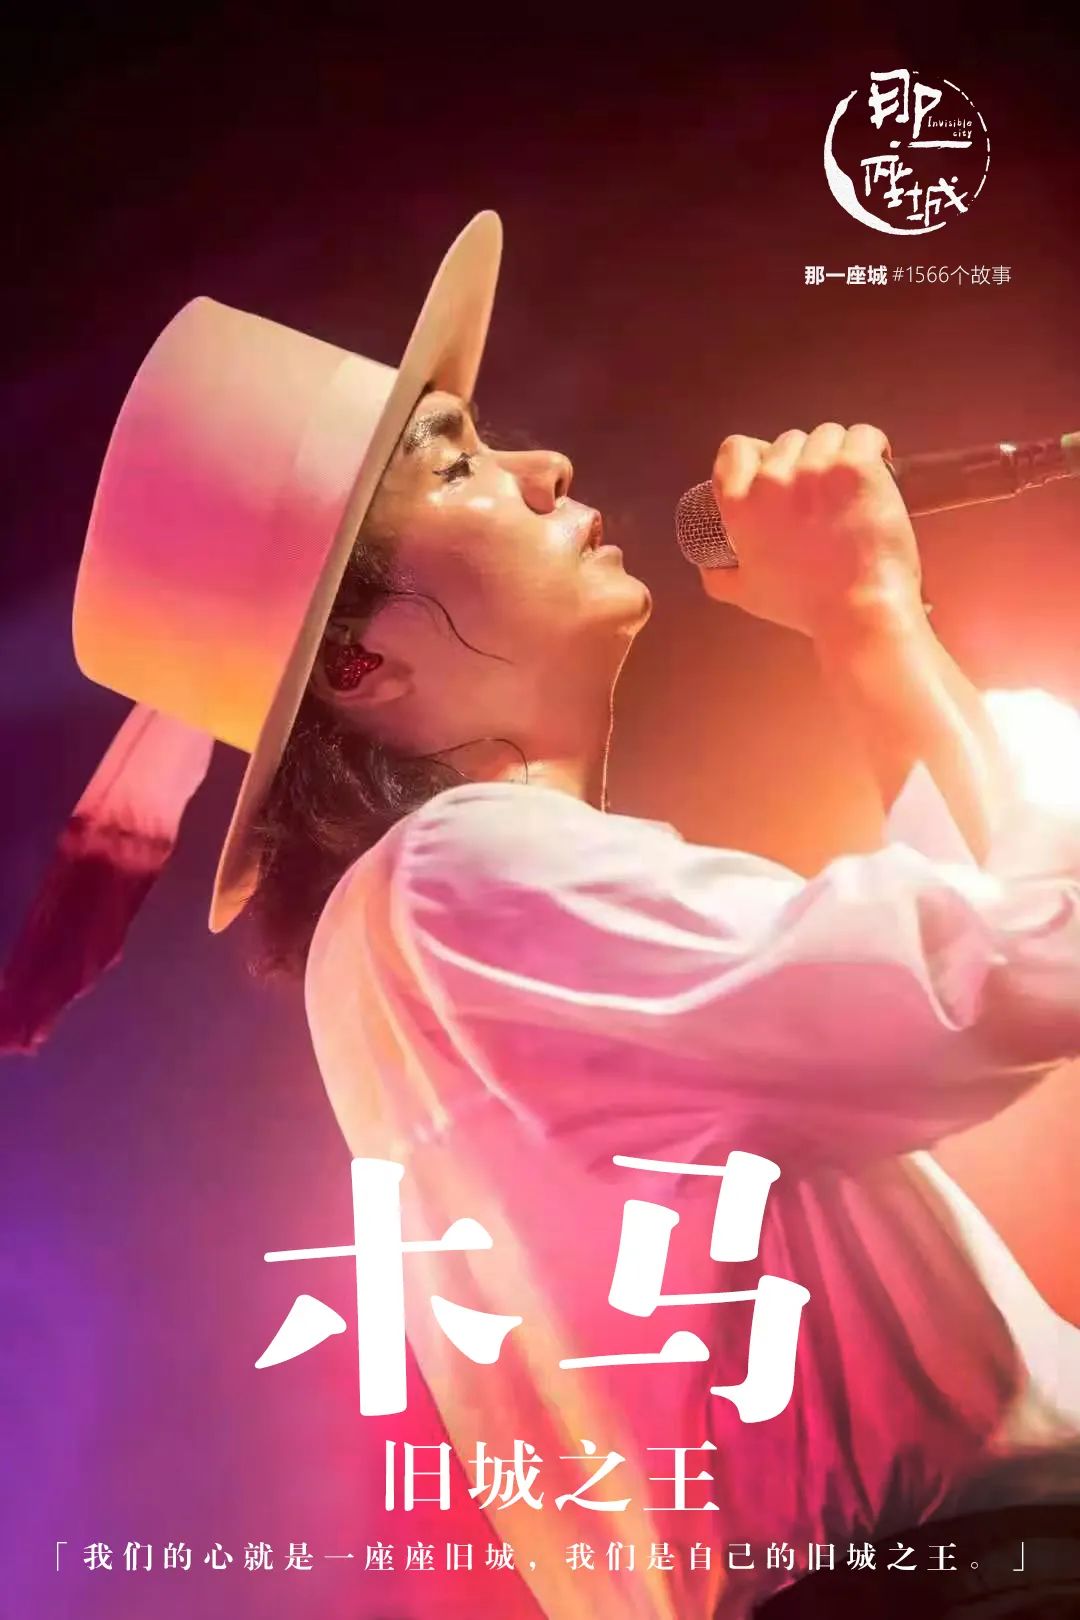 MAO Livehouse上海 | 8月演出预告 | 共计19场-上海MAOLivehouse